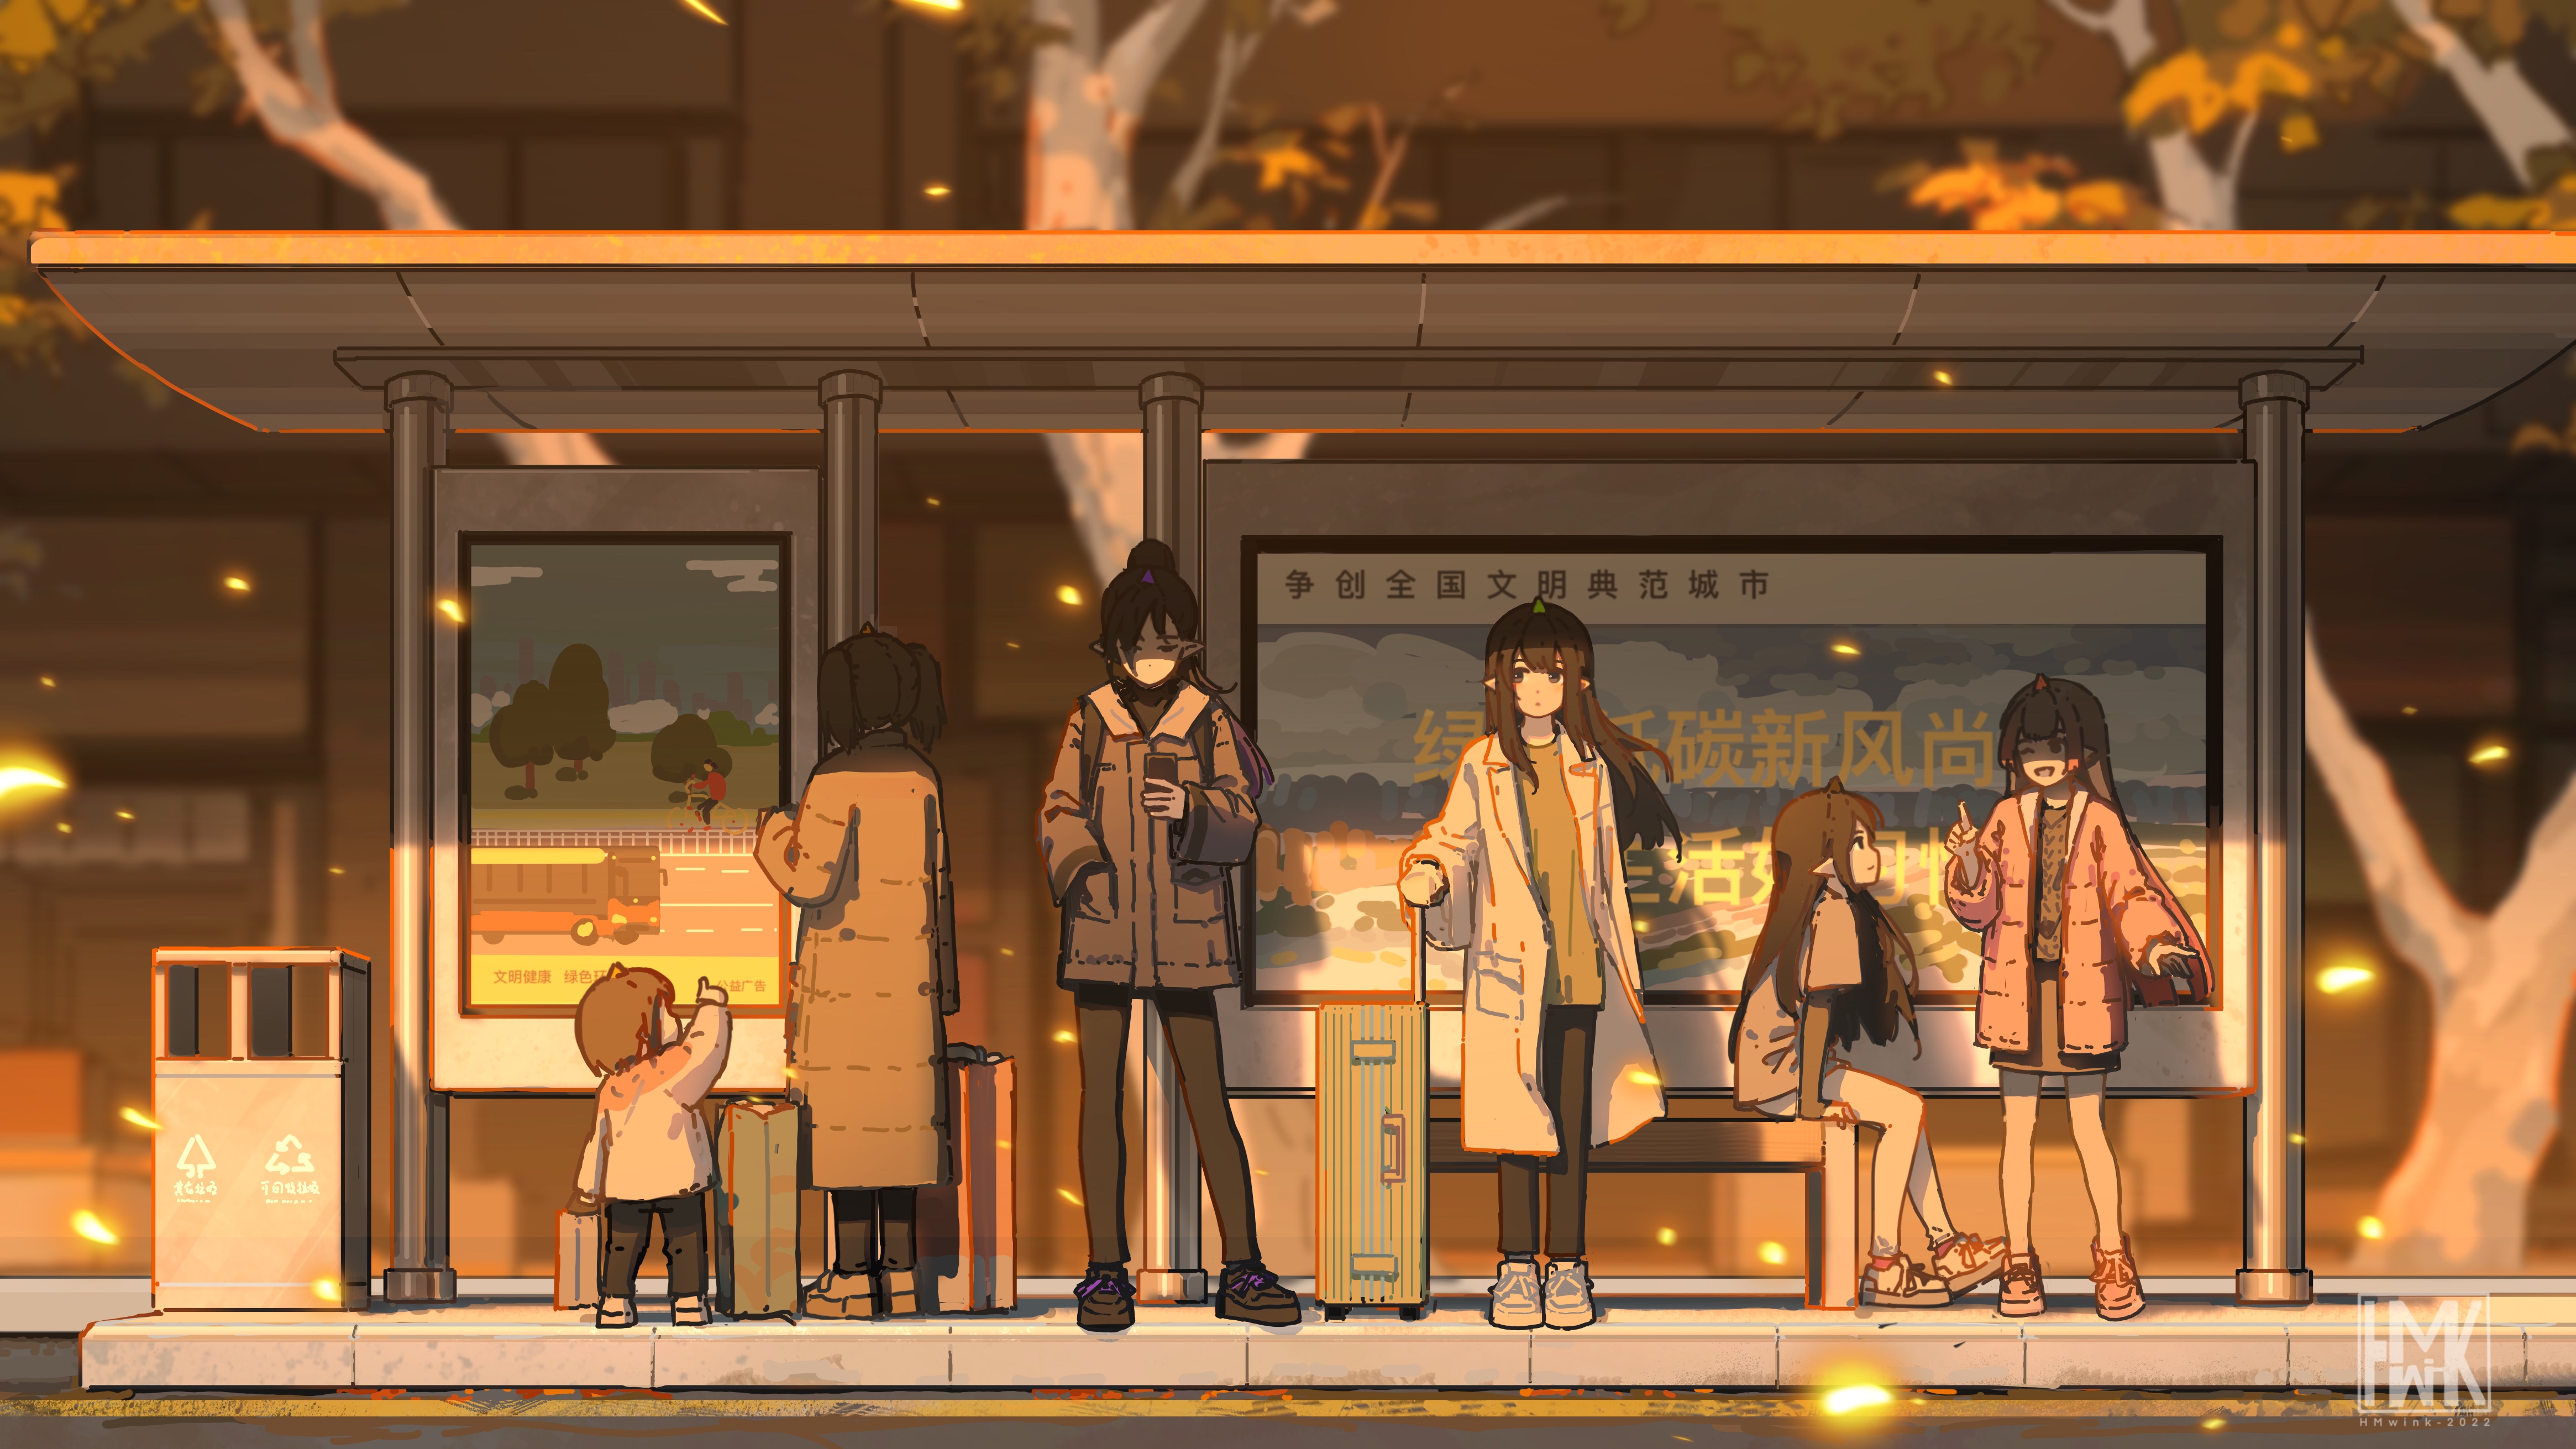 Anime Girls Artwork Original Characters Coats Bus Stop Sunlight Leaves Pointy Ears Digital Art Brief 4661x2622